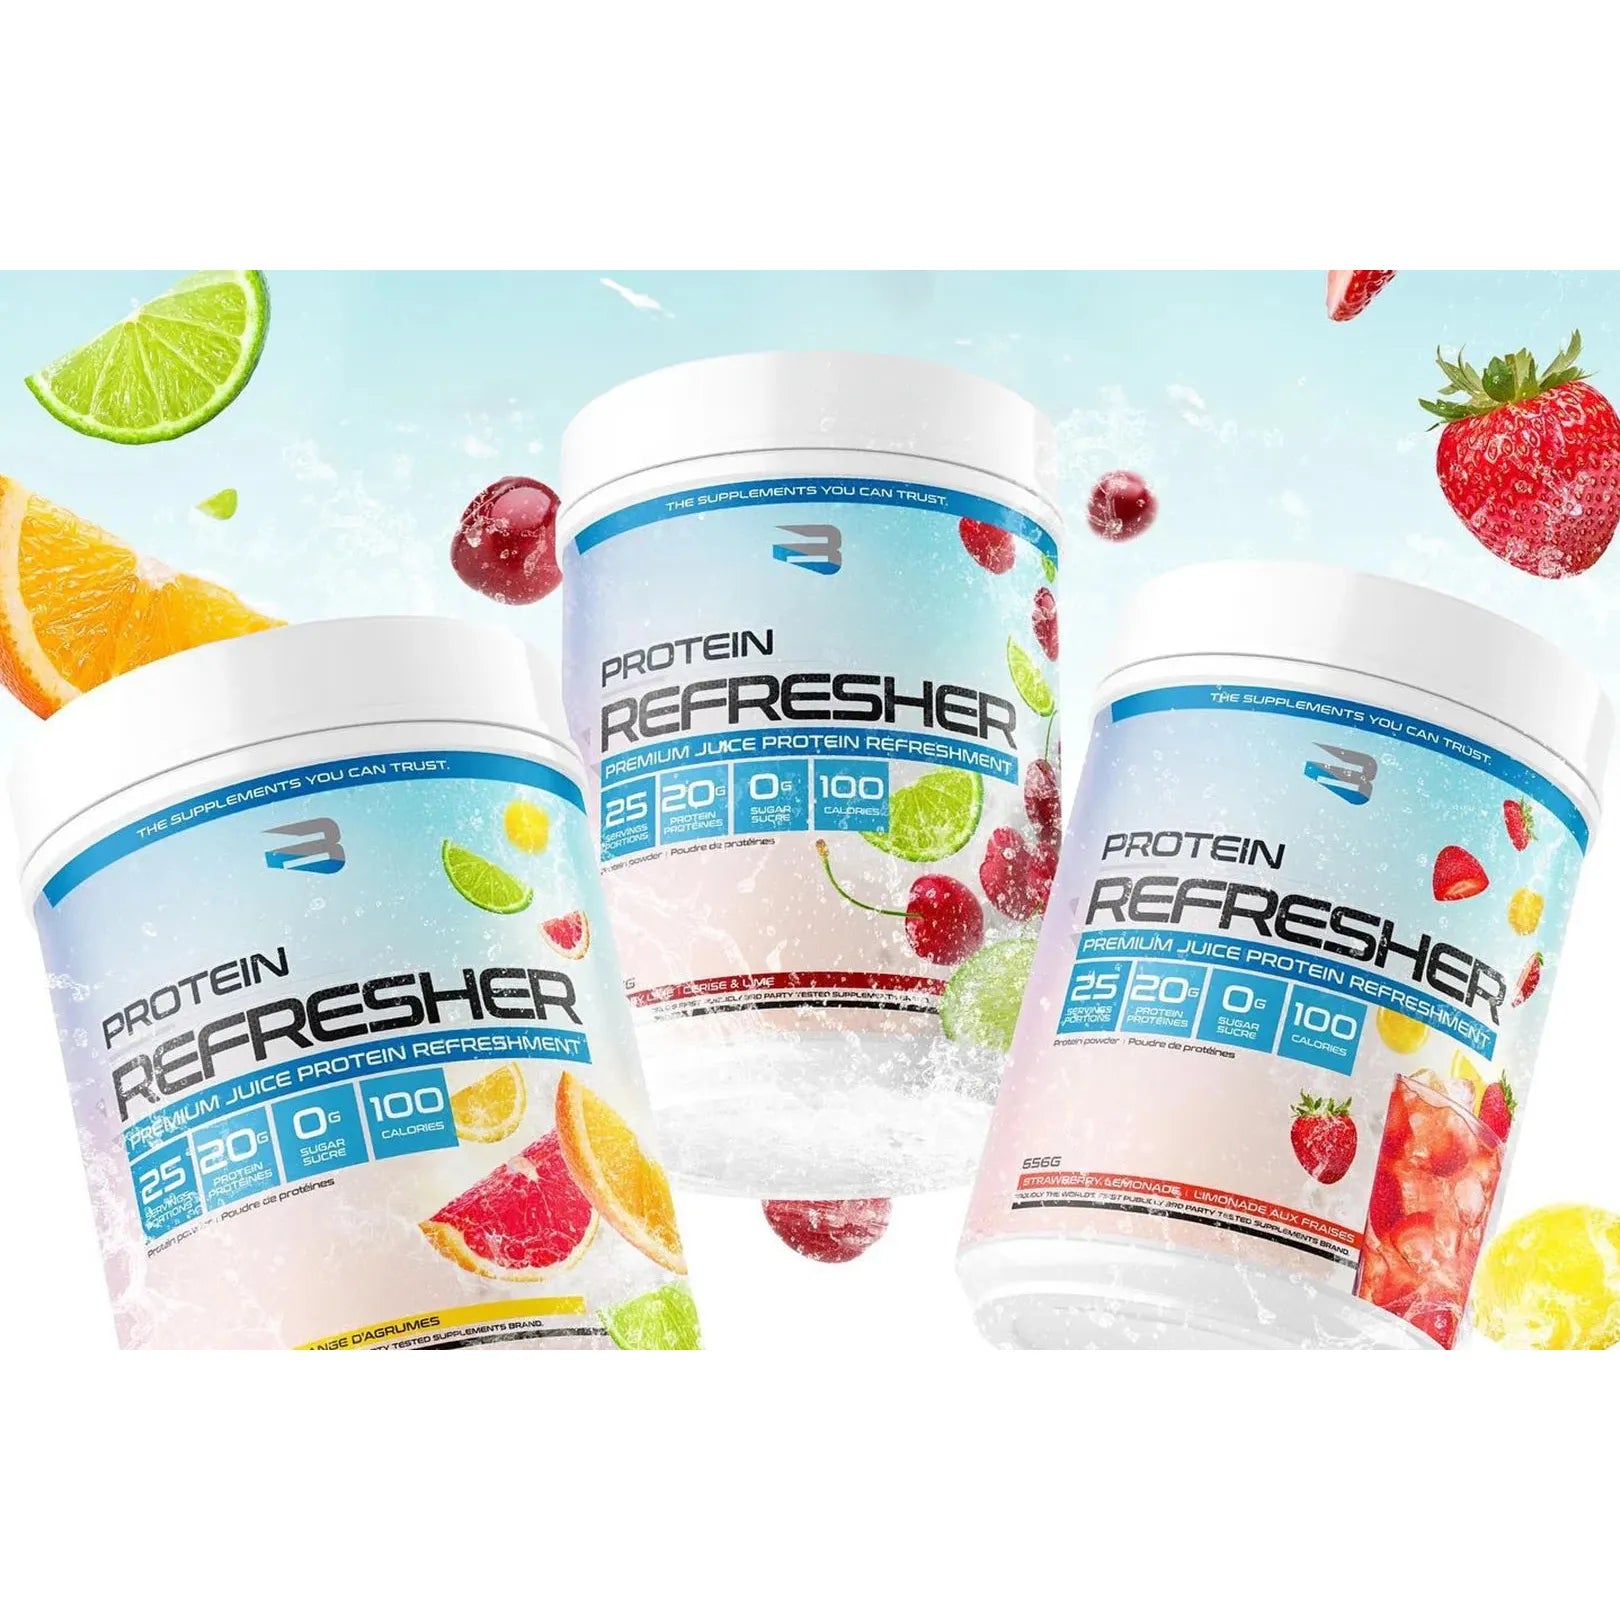 Believe Supplements Protein Refresher (25 servings)